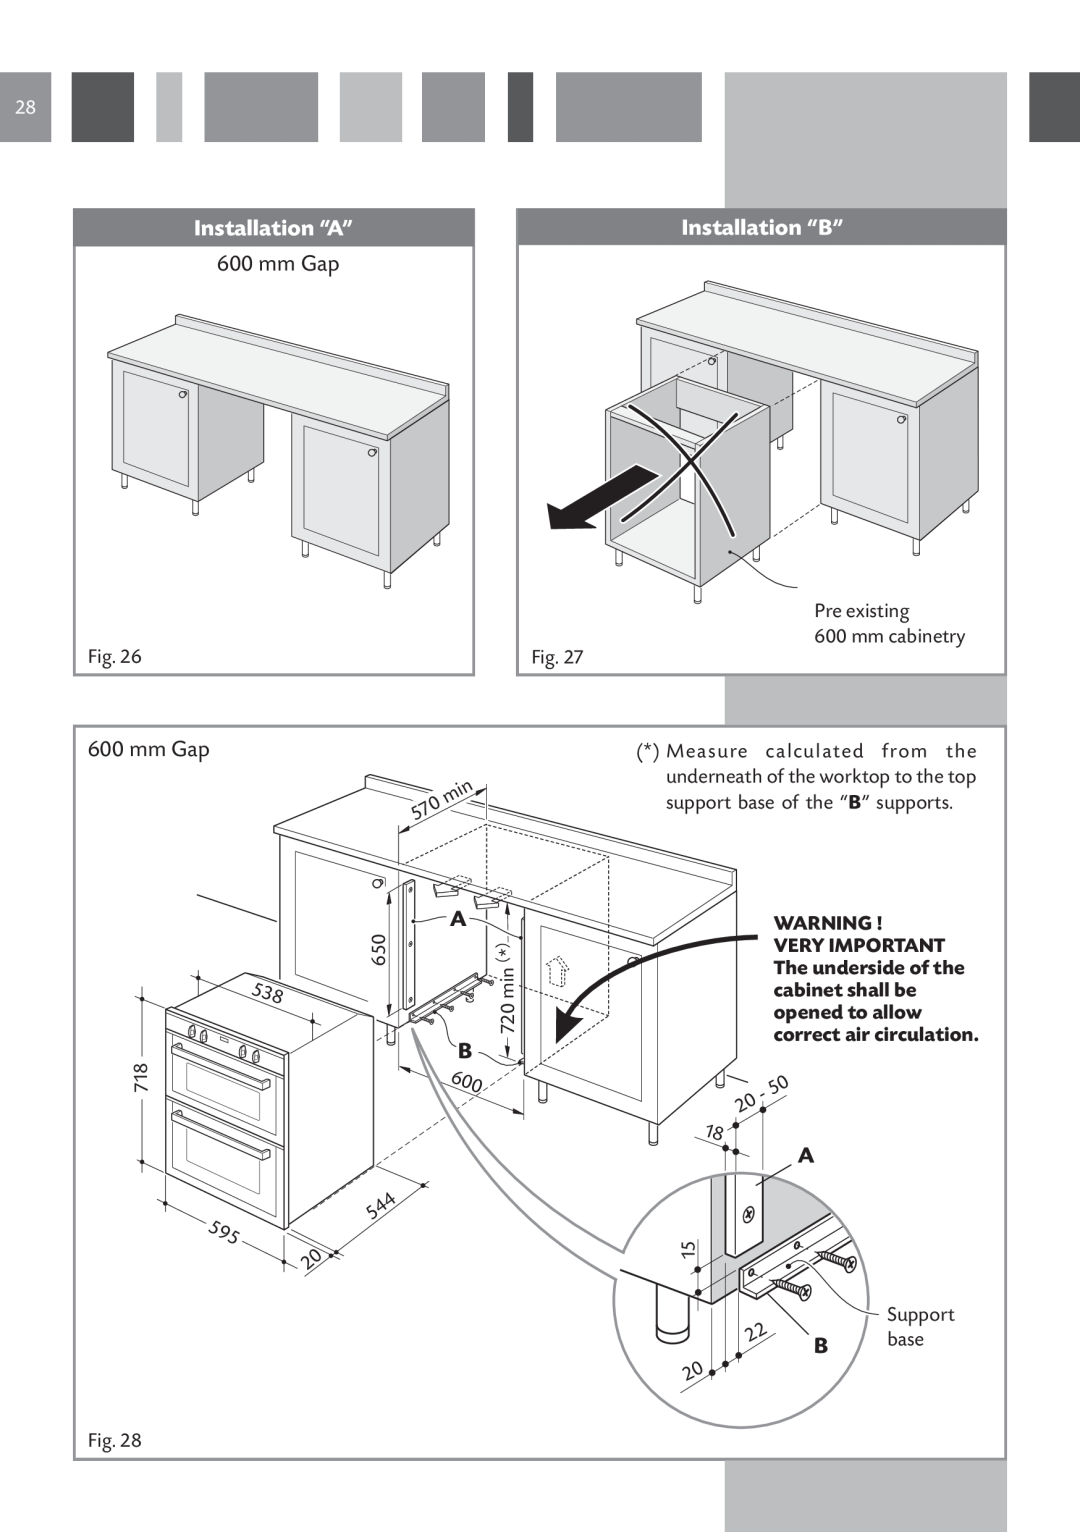 CDA DV 710 manual Installation “B”, mm Gap, Installation “A”, mm cabinetry, Support 